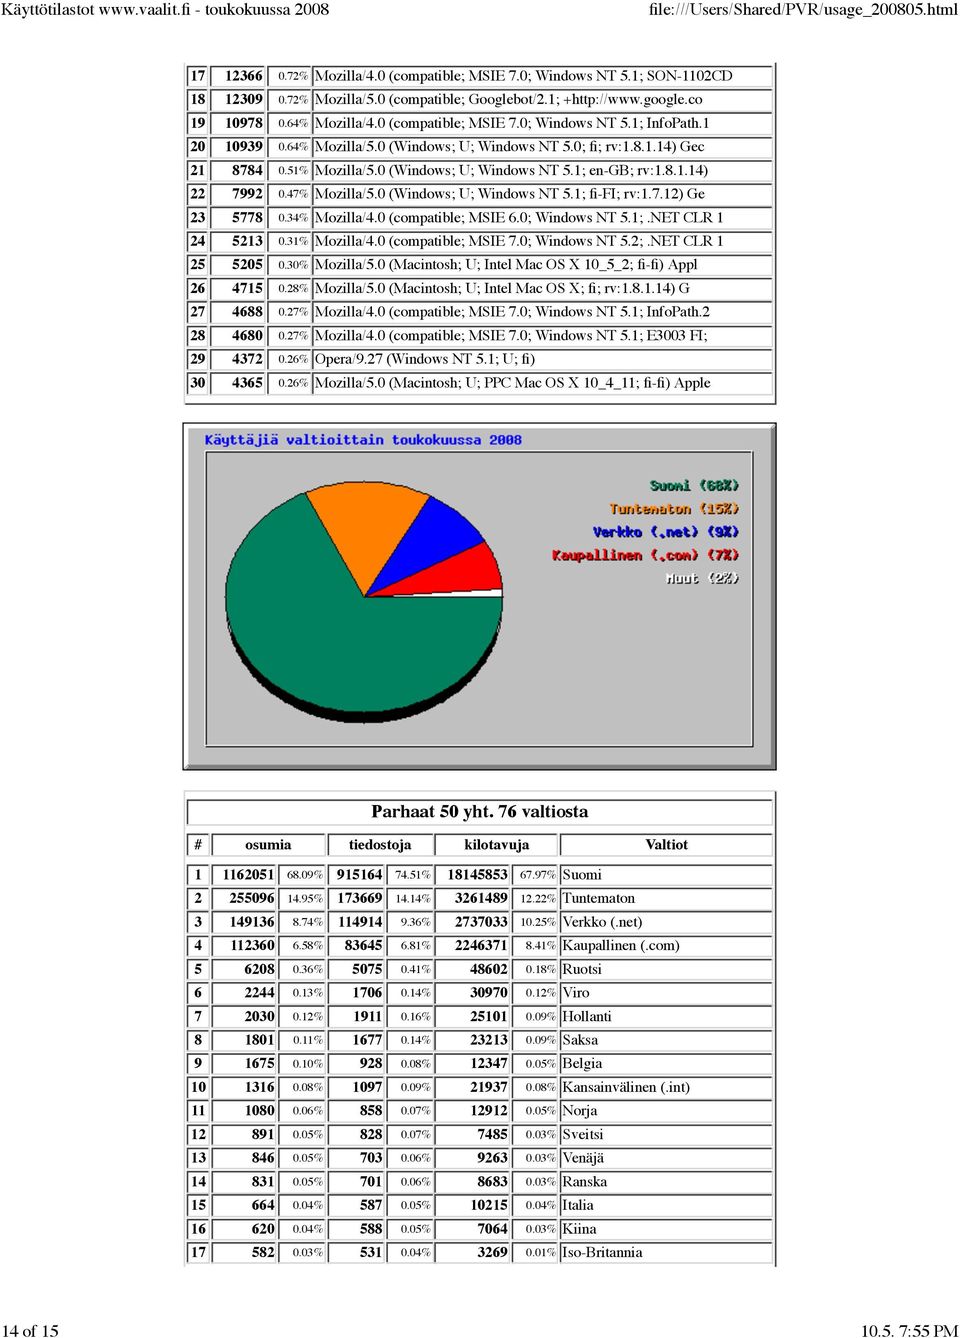 47% Mozilla/5.0 (Windows; U; Windows NT 5.1; fi-fi; rv:1.7.12) Ge 23 5778 0.34% Mozilla/4.0 (compatible; MSIE 6.0; Windows NT 5.1;.NET CLR 1 24 5213 0.31% Mozilla/4.0 (compatible; MSIE 7.